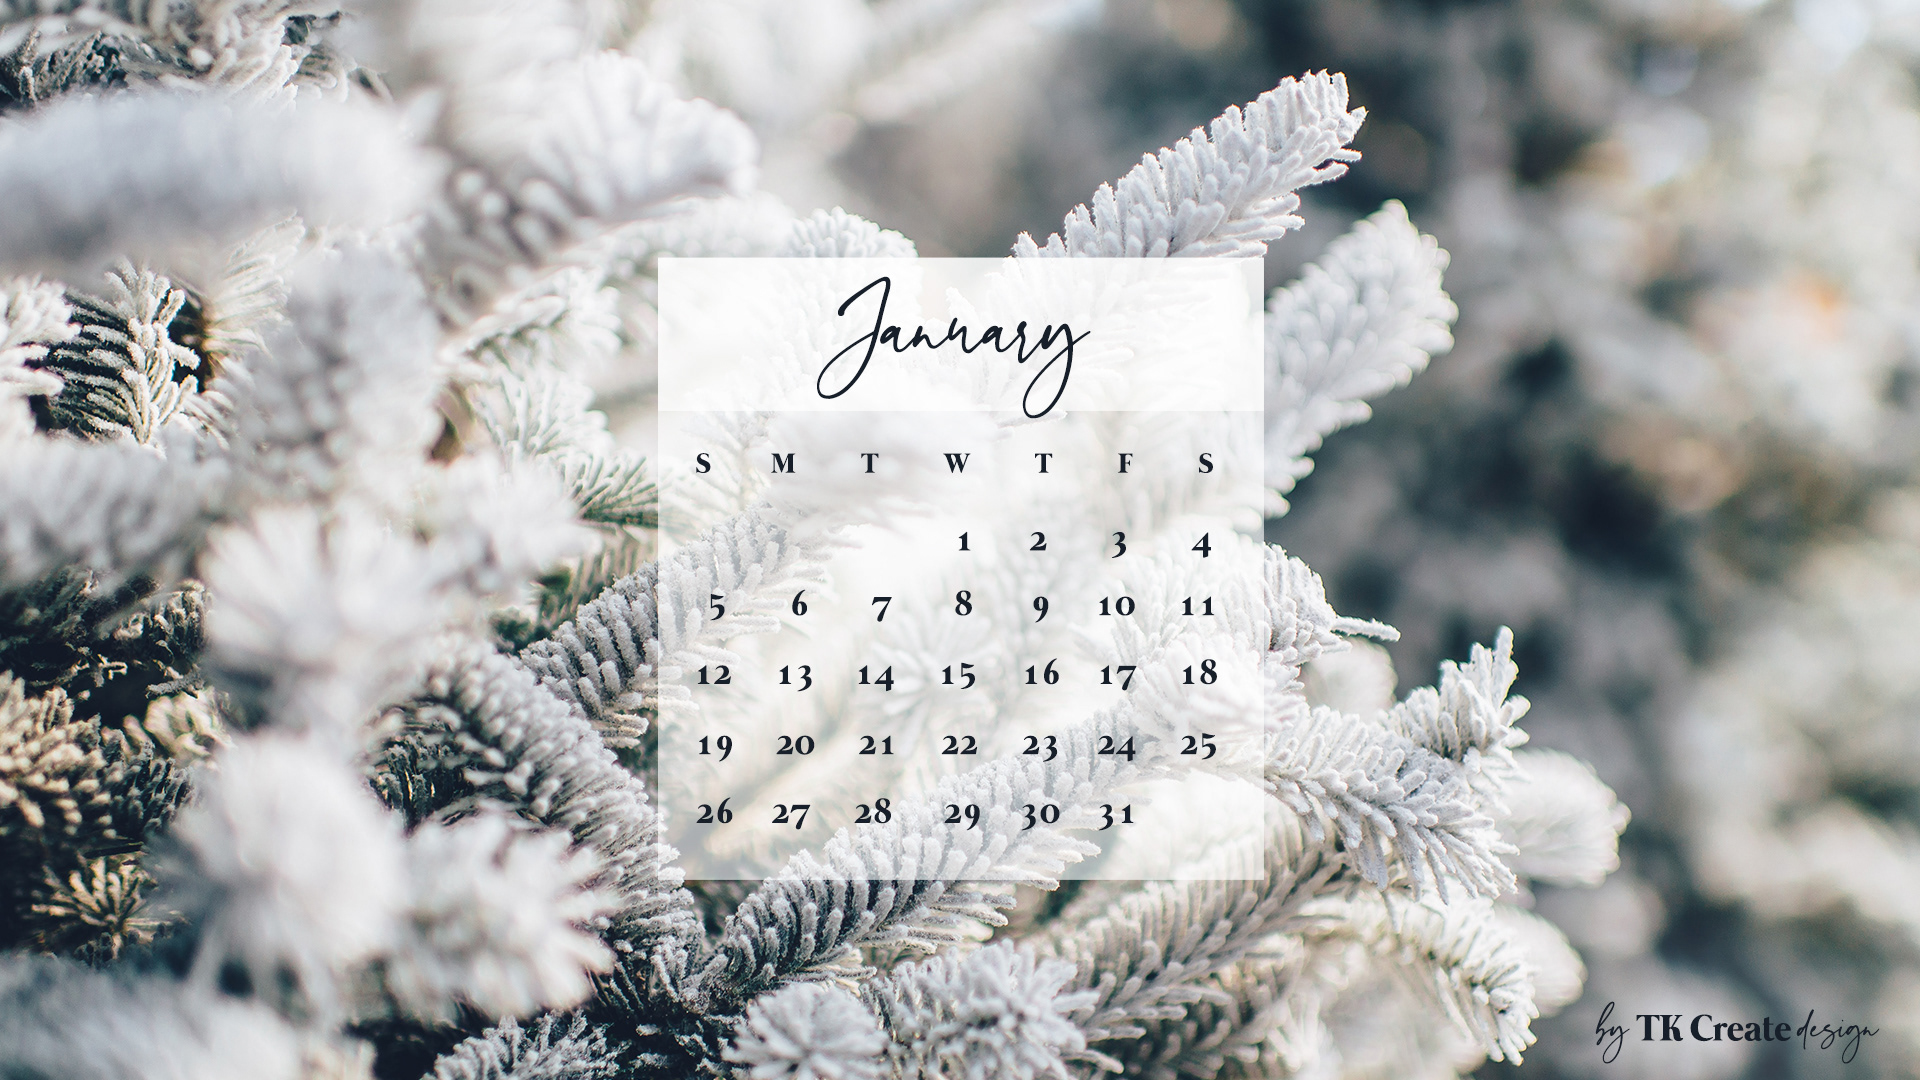 Tatiana K - January 2020 FREE Downloadable Calendar